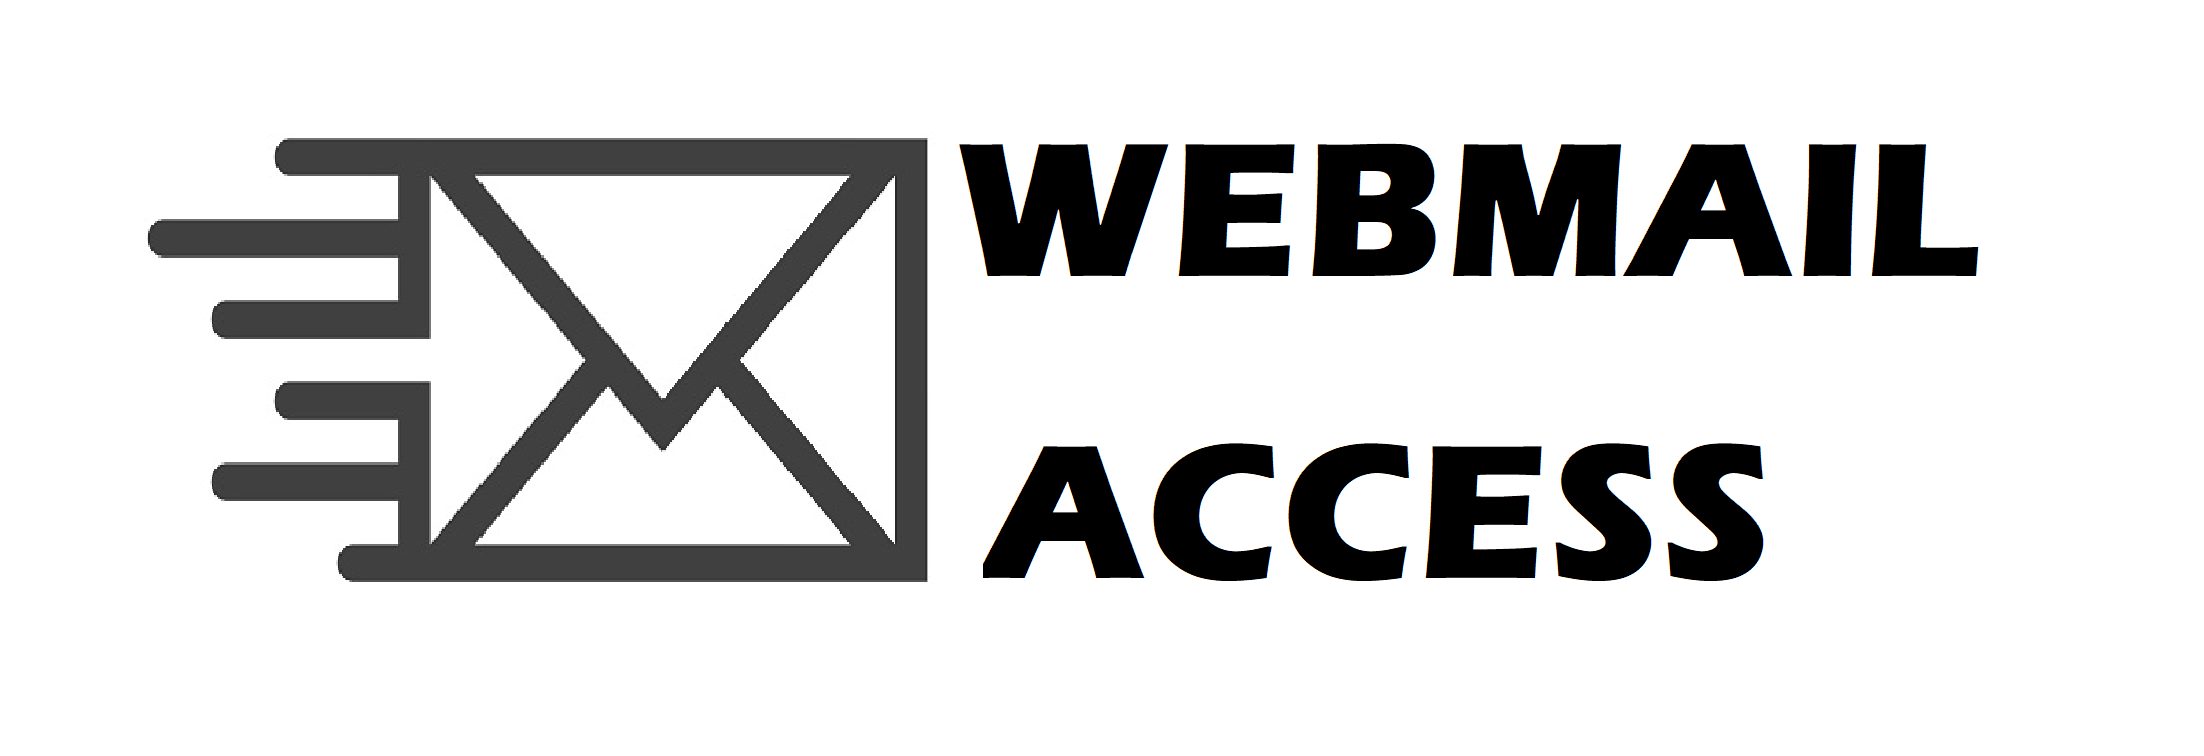 logo webmail acces3